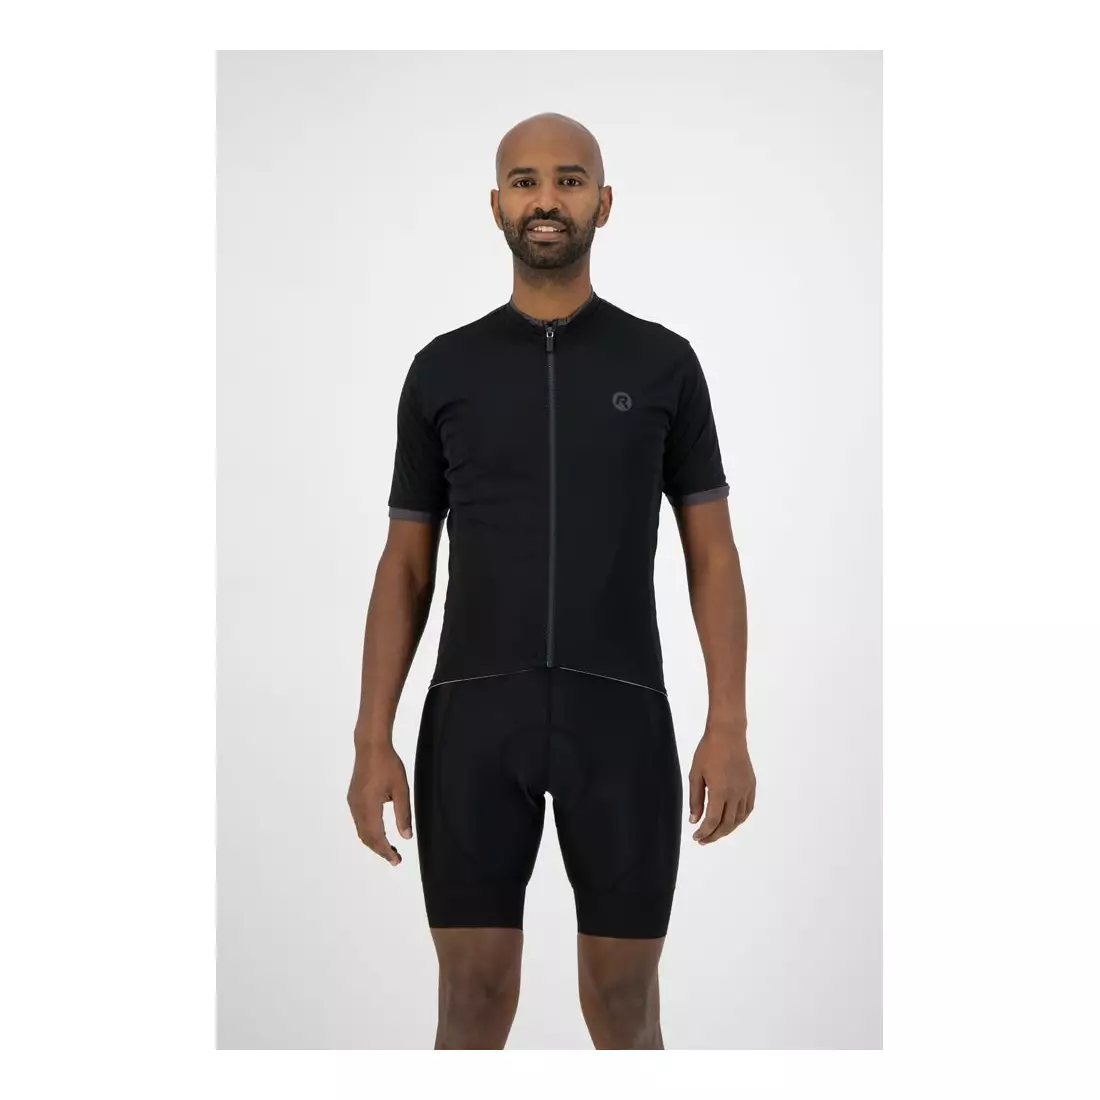 ROGELLI ESSENTIAL men's cycling jersey, black